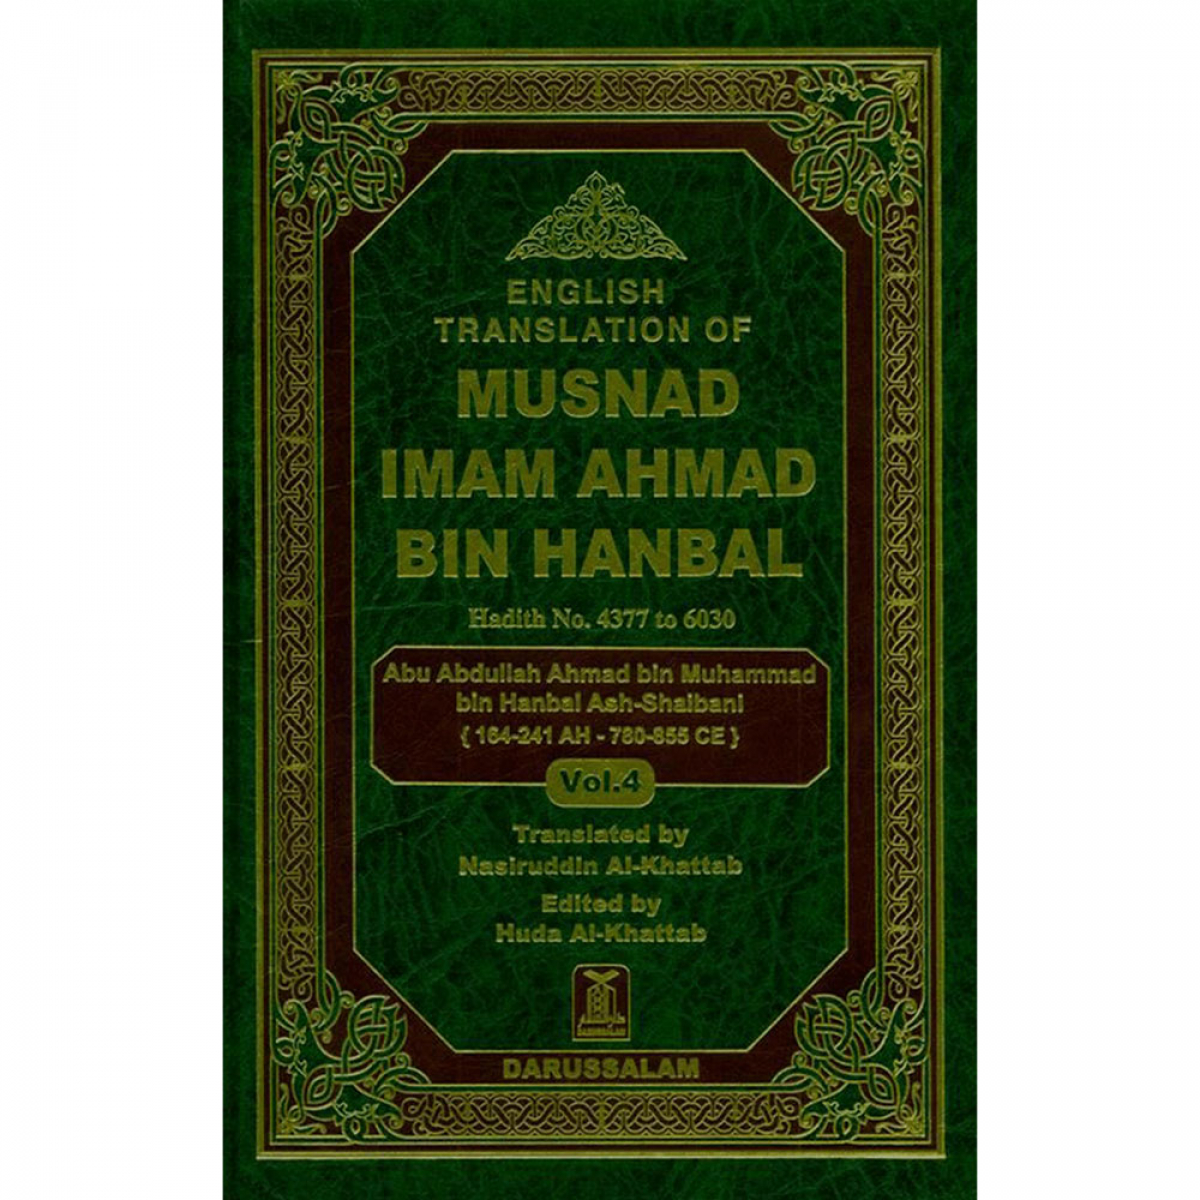 Musnad Imam Ahmad Bin Hanbal (Arabic & English) Vol 4